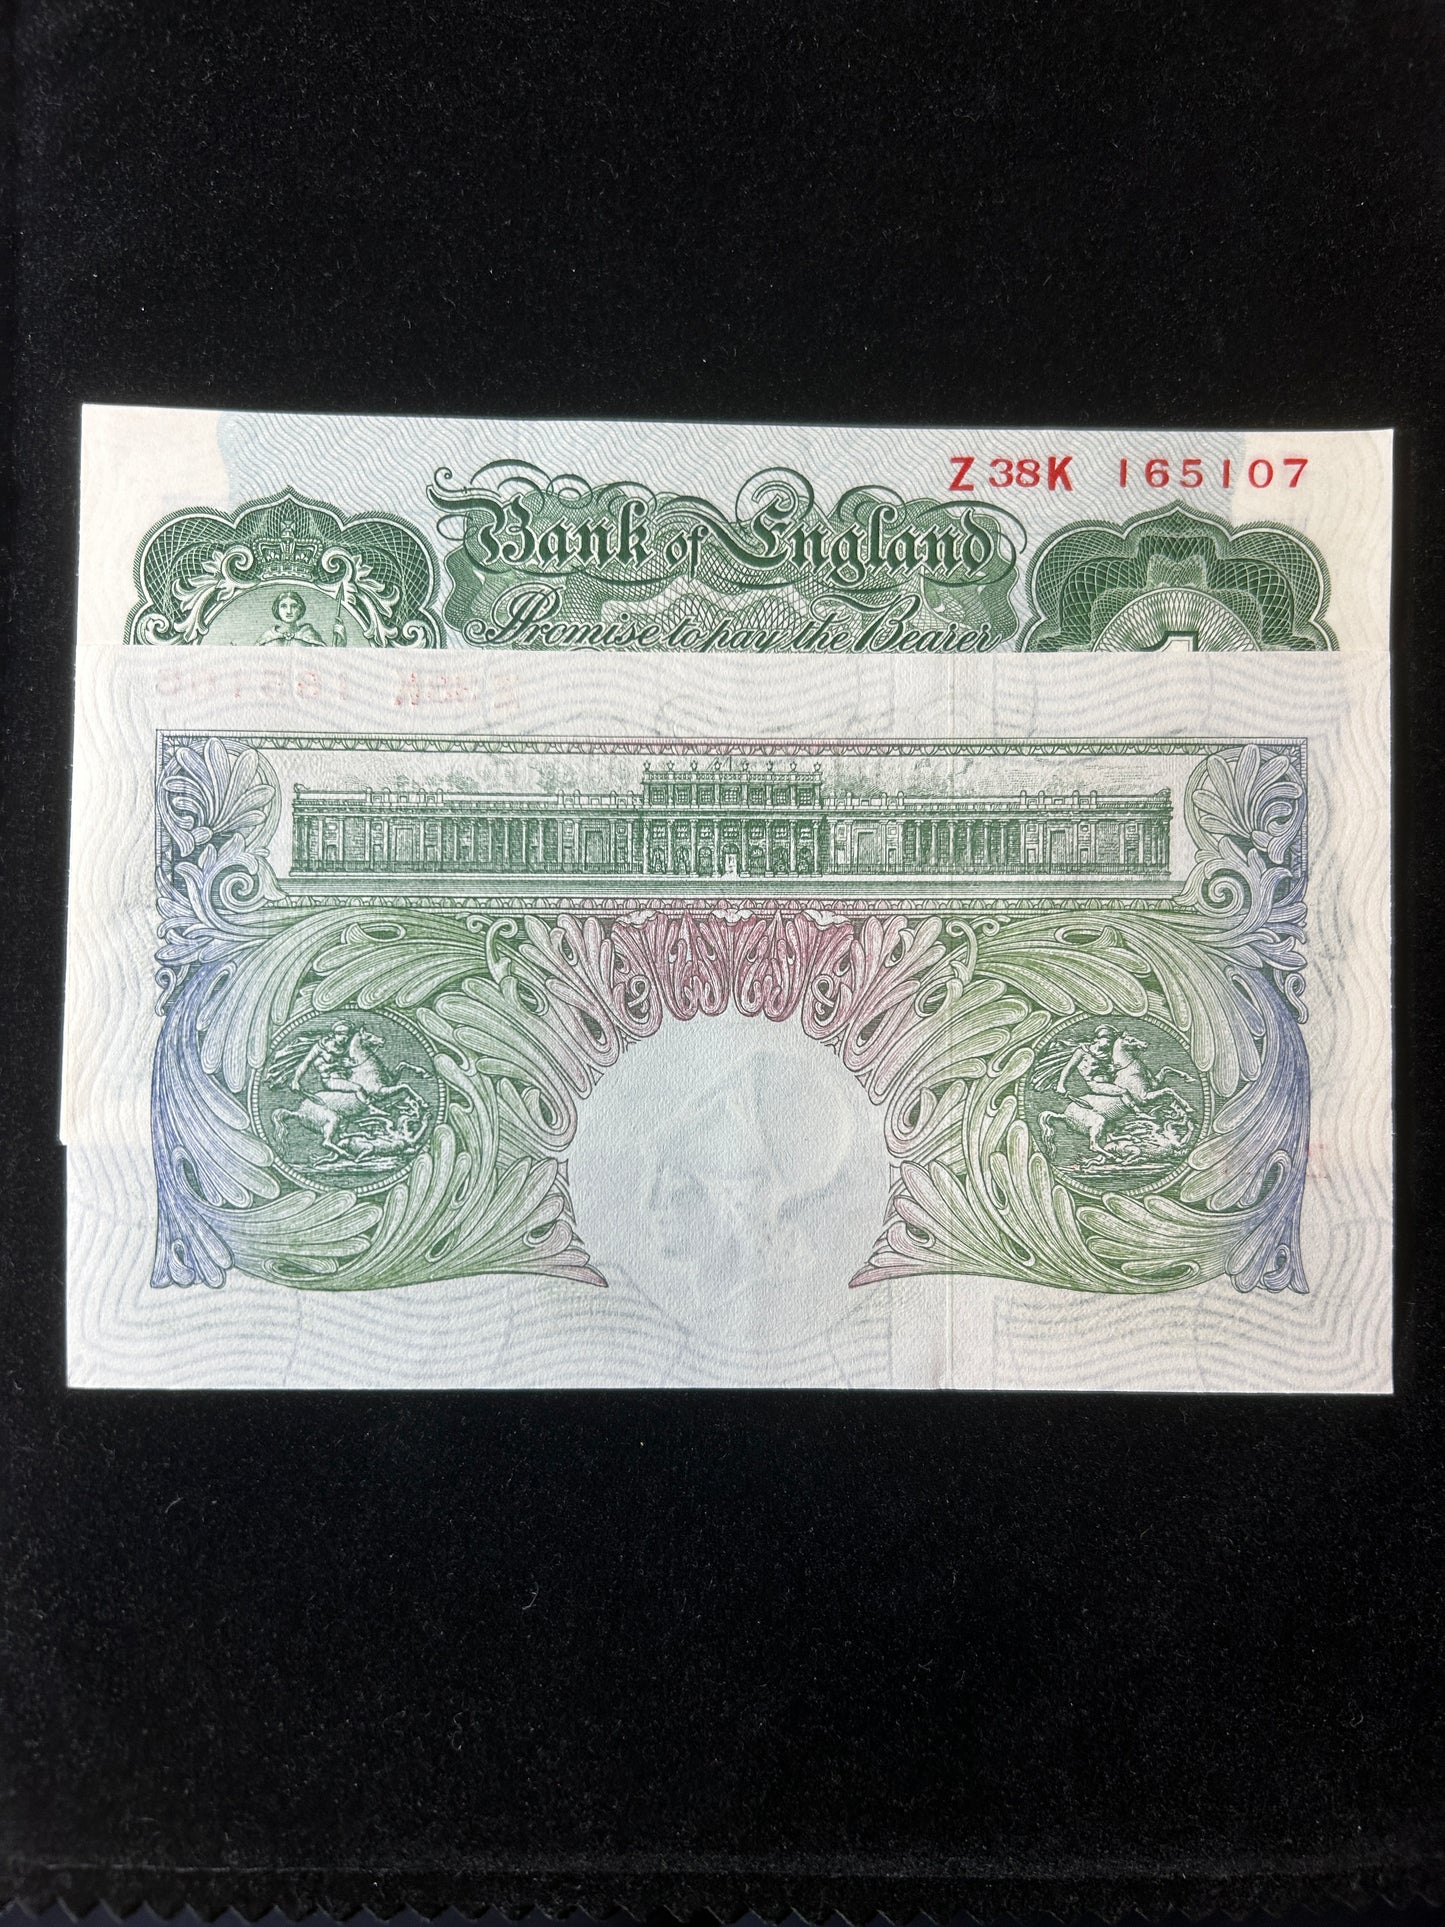 10 x 1 Pound Notes L.K. OBrien consecutive